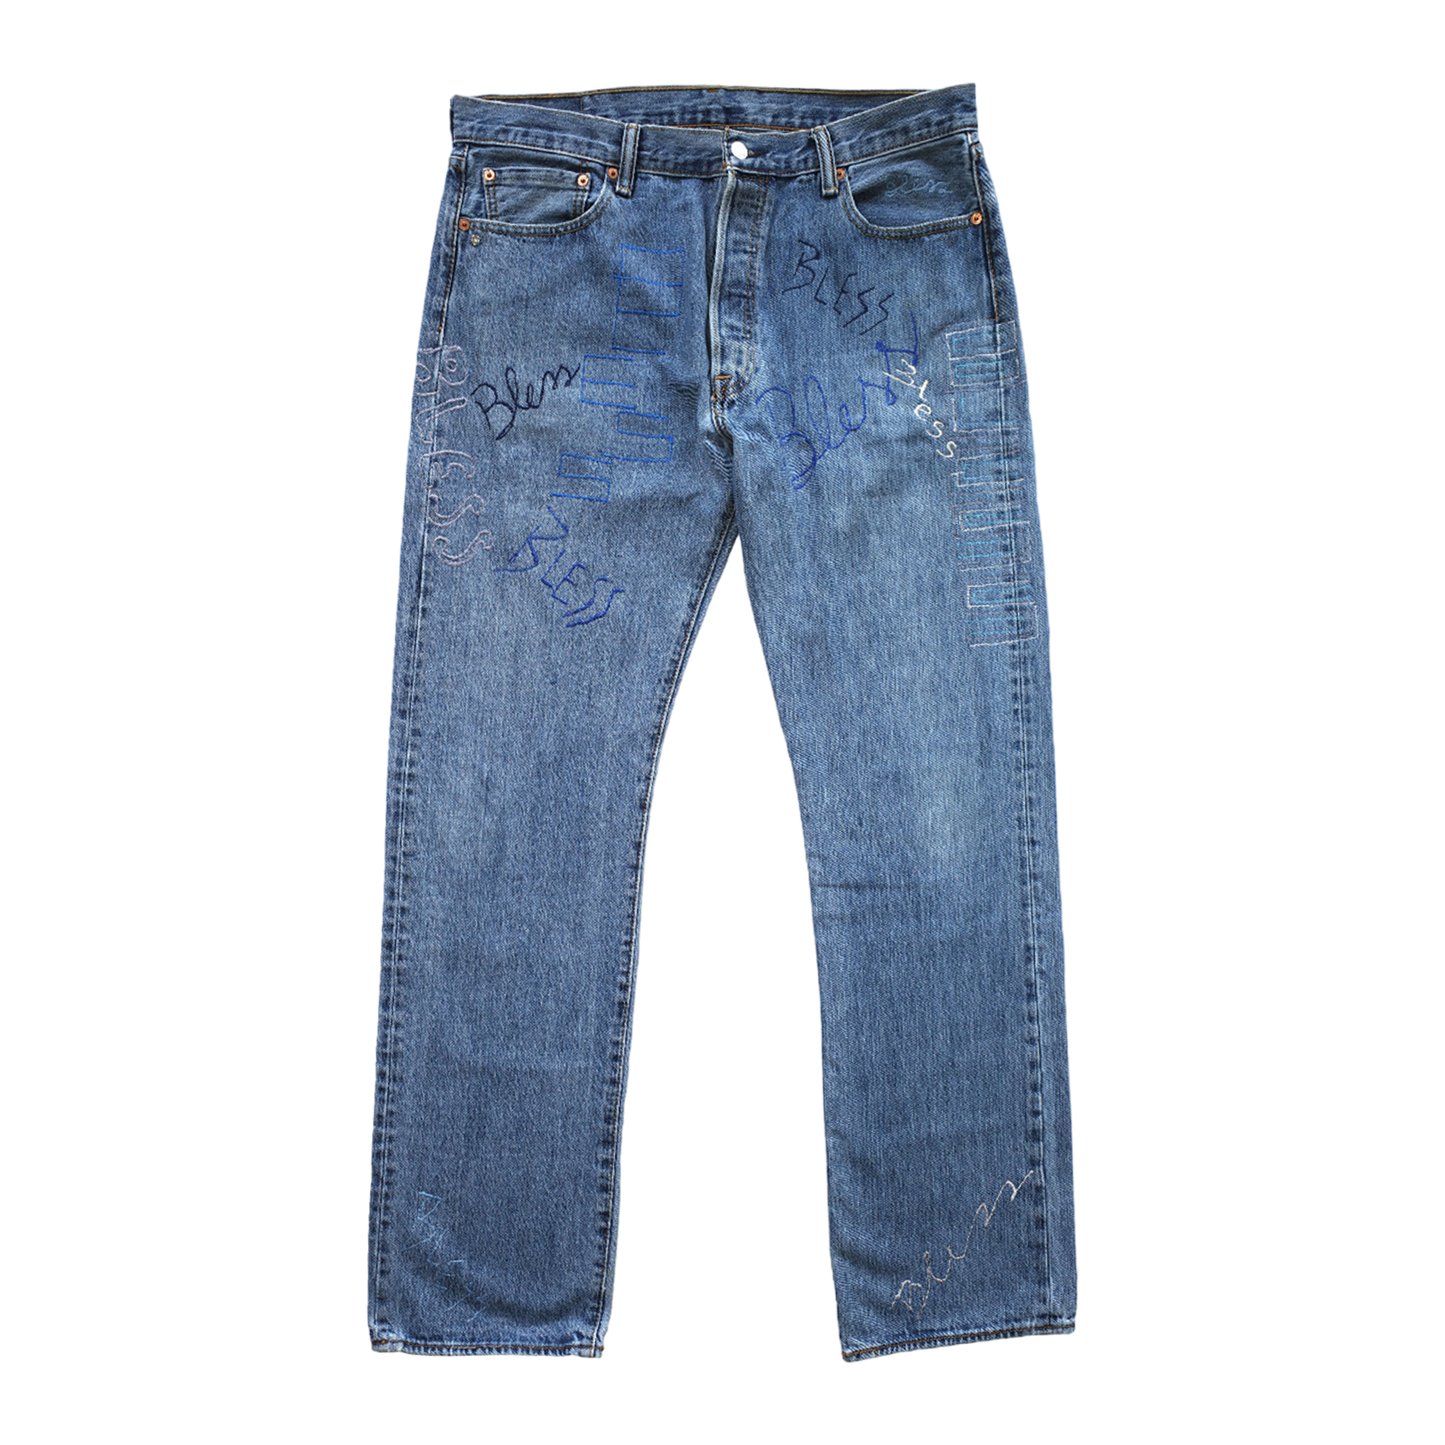 Nº71 Embroidery Jeans Vintage Levi's Denim Blue / Blue